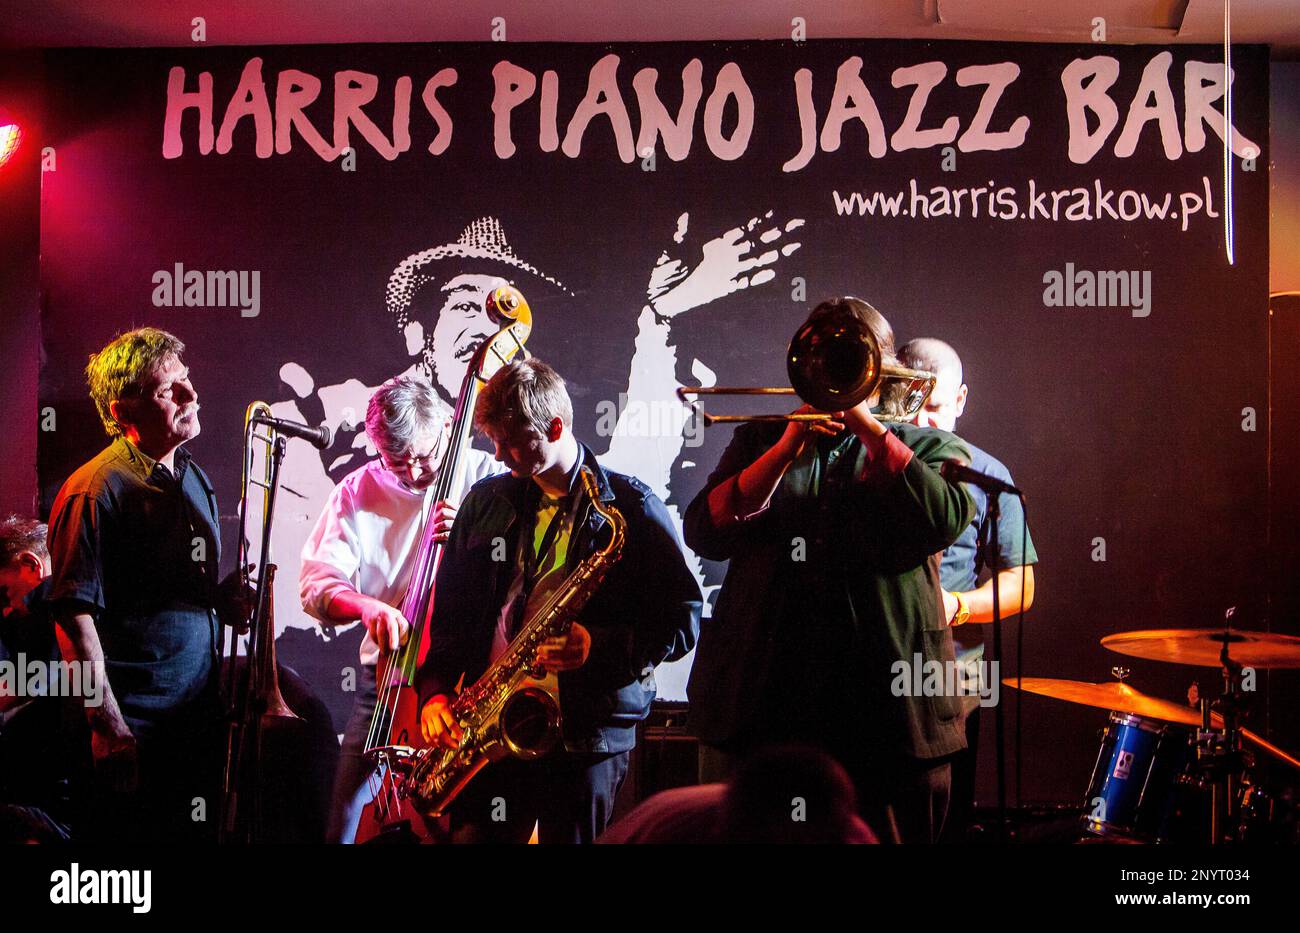 Harris Piano Jazz Bar, Krakow; Poland Stock Photo - Alamy